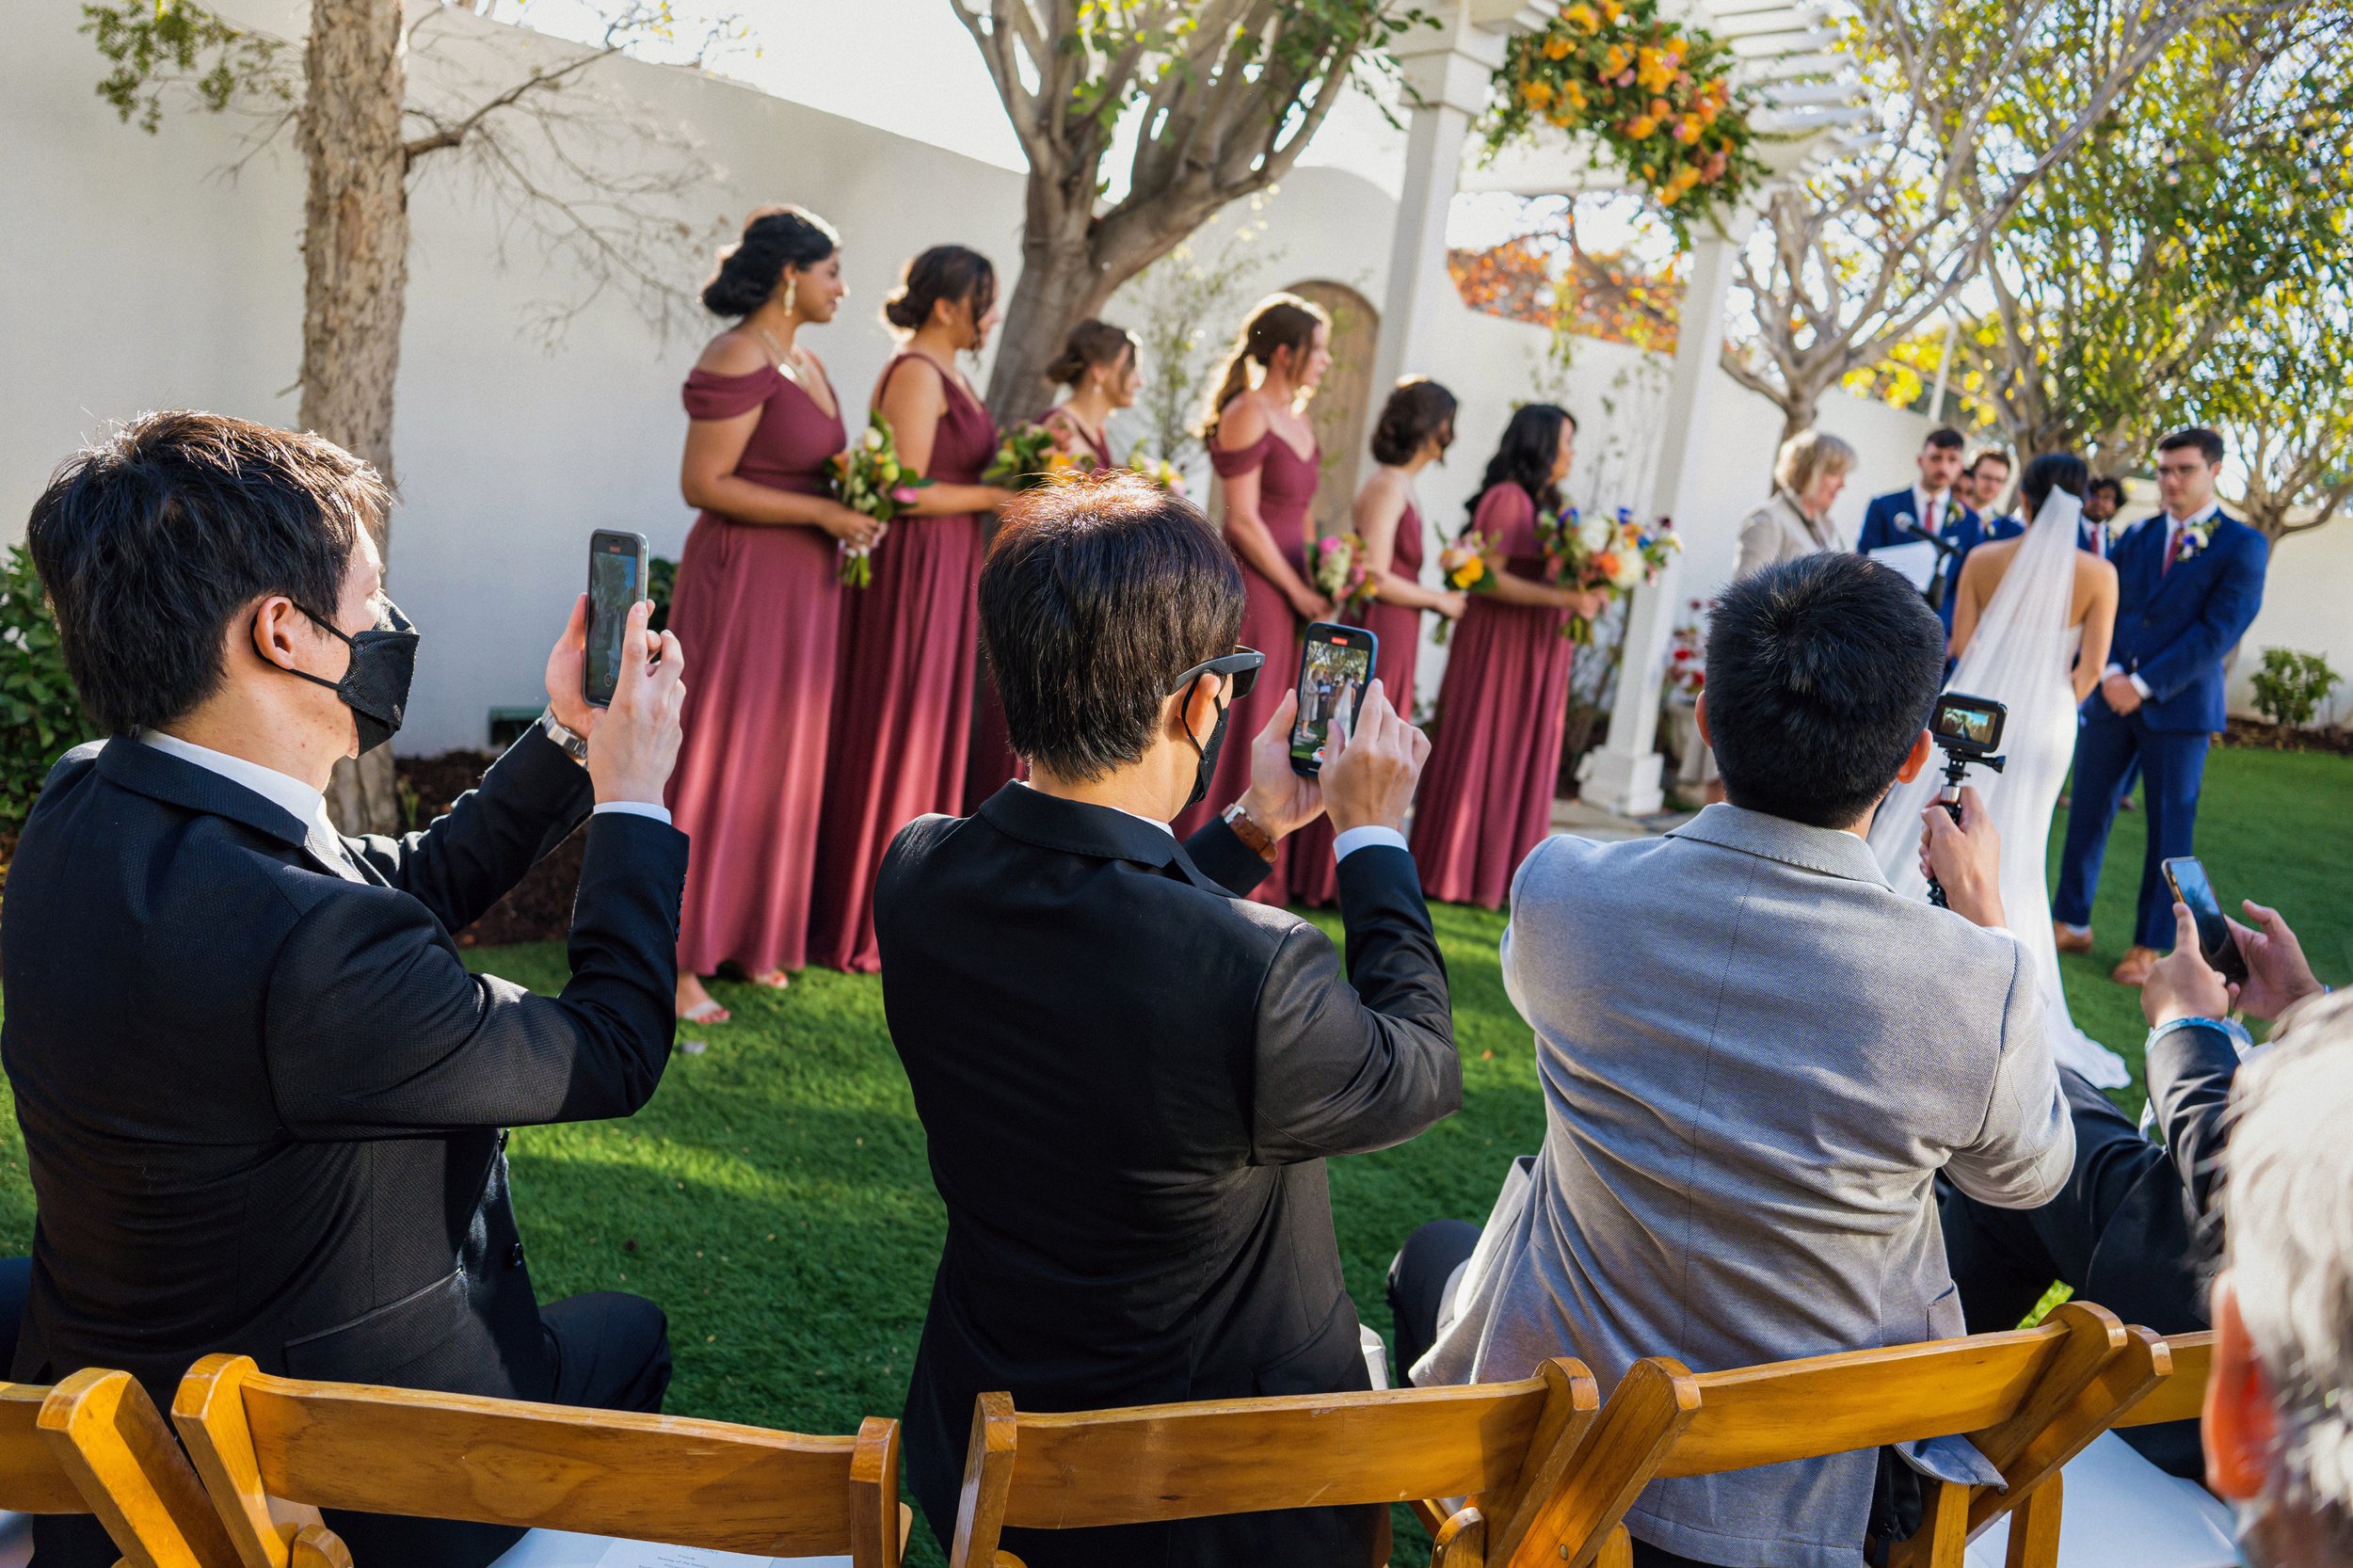 Verandas Beach House_los angeles_wedding photojournalist_candid_natural wedding photo_los angeles wedding photographer_documentary wedding photo-036.JPG